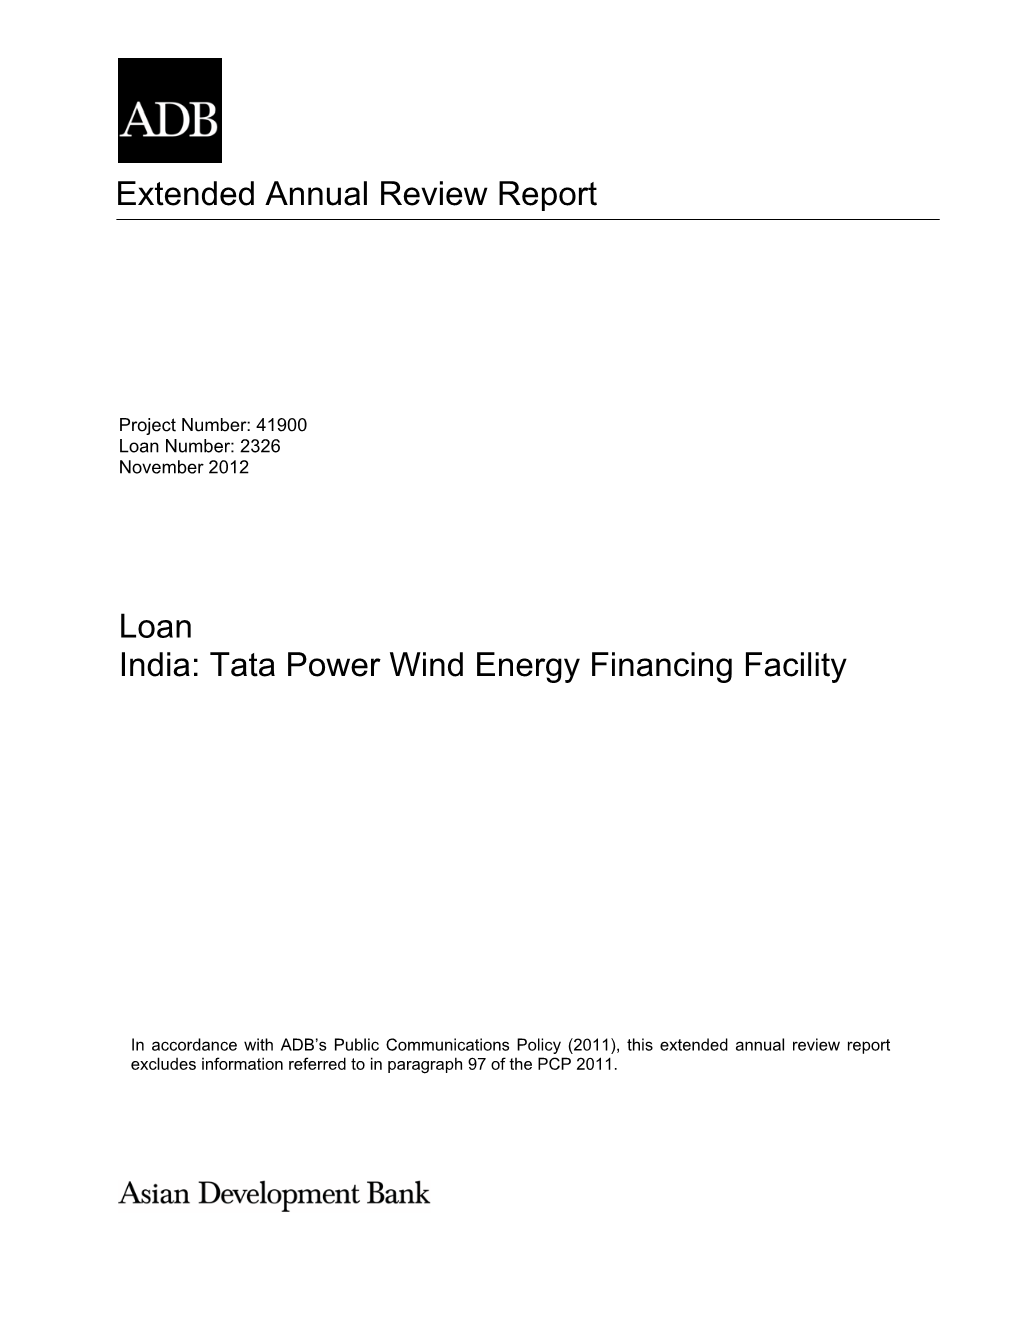 Loan India: Tata Power Wind Energy Financing Facility